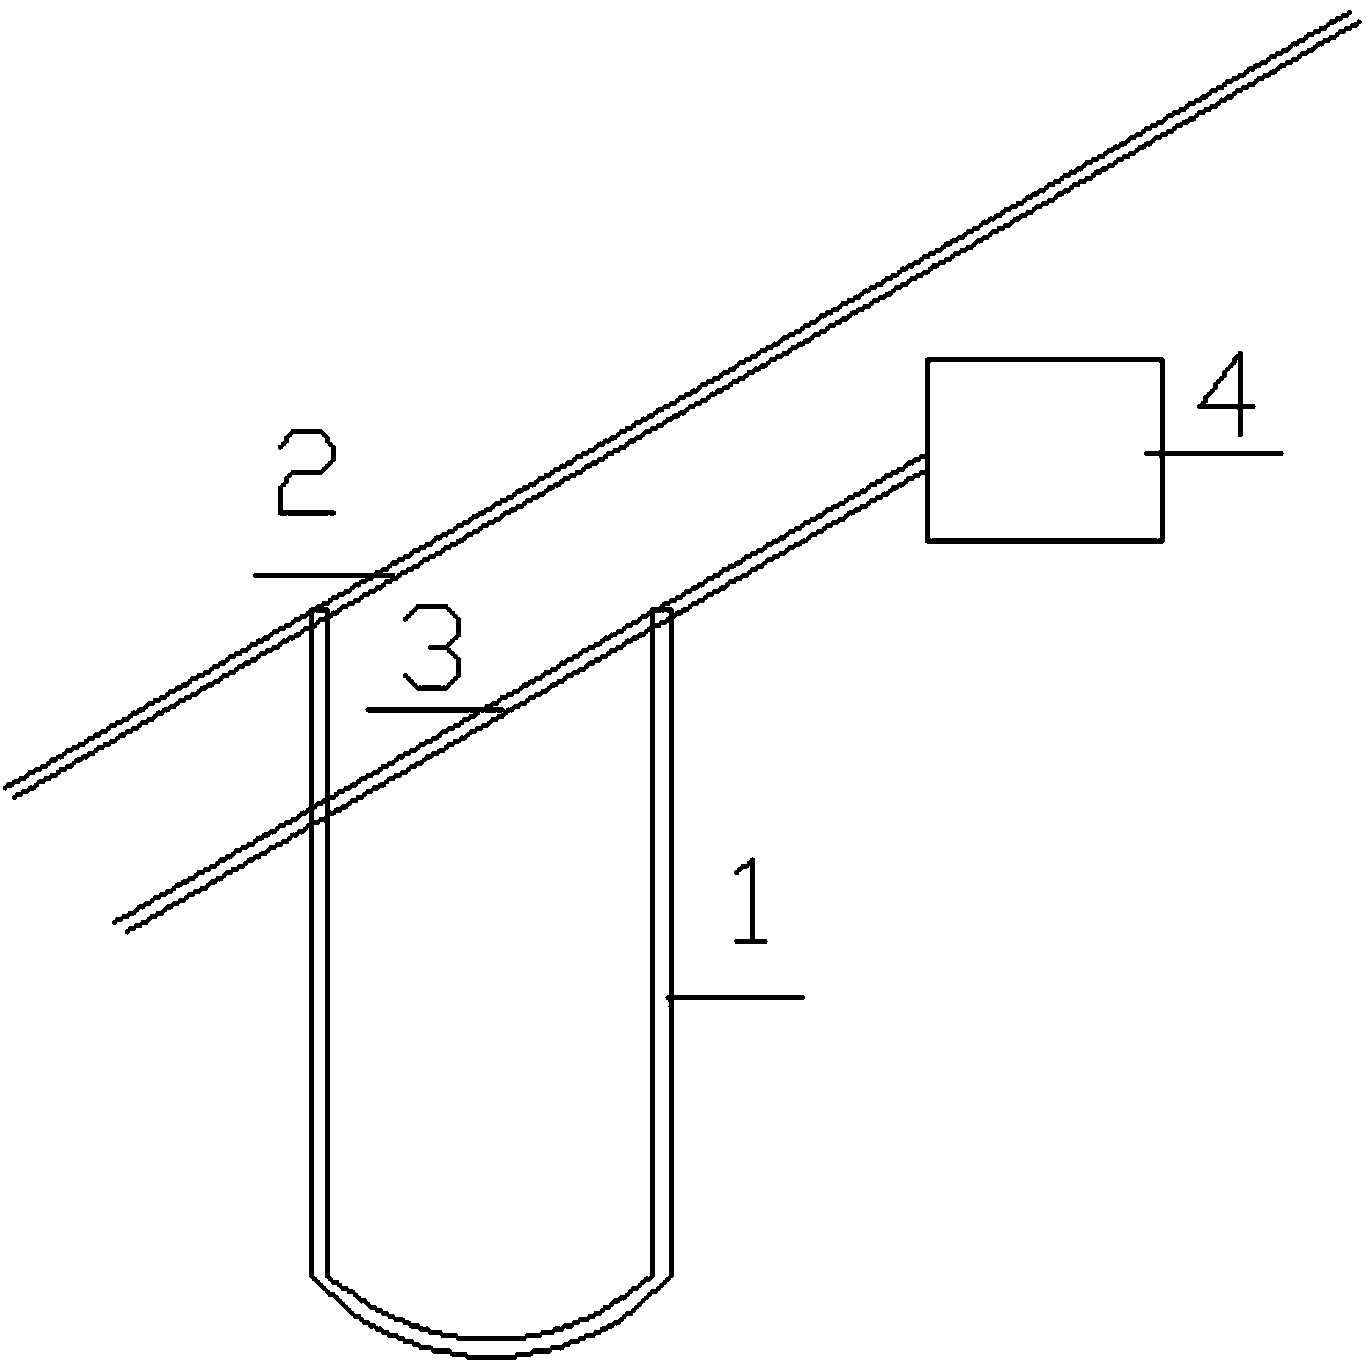 Method for drying silt or sludge